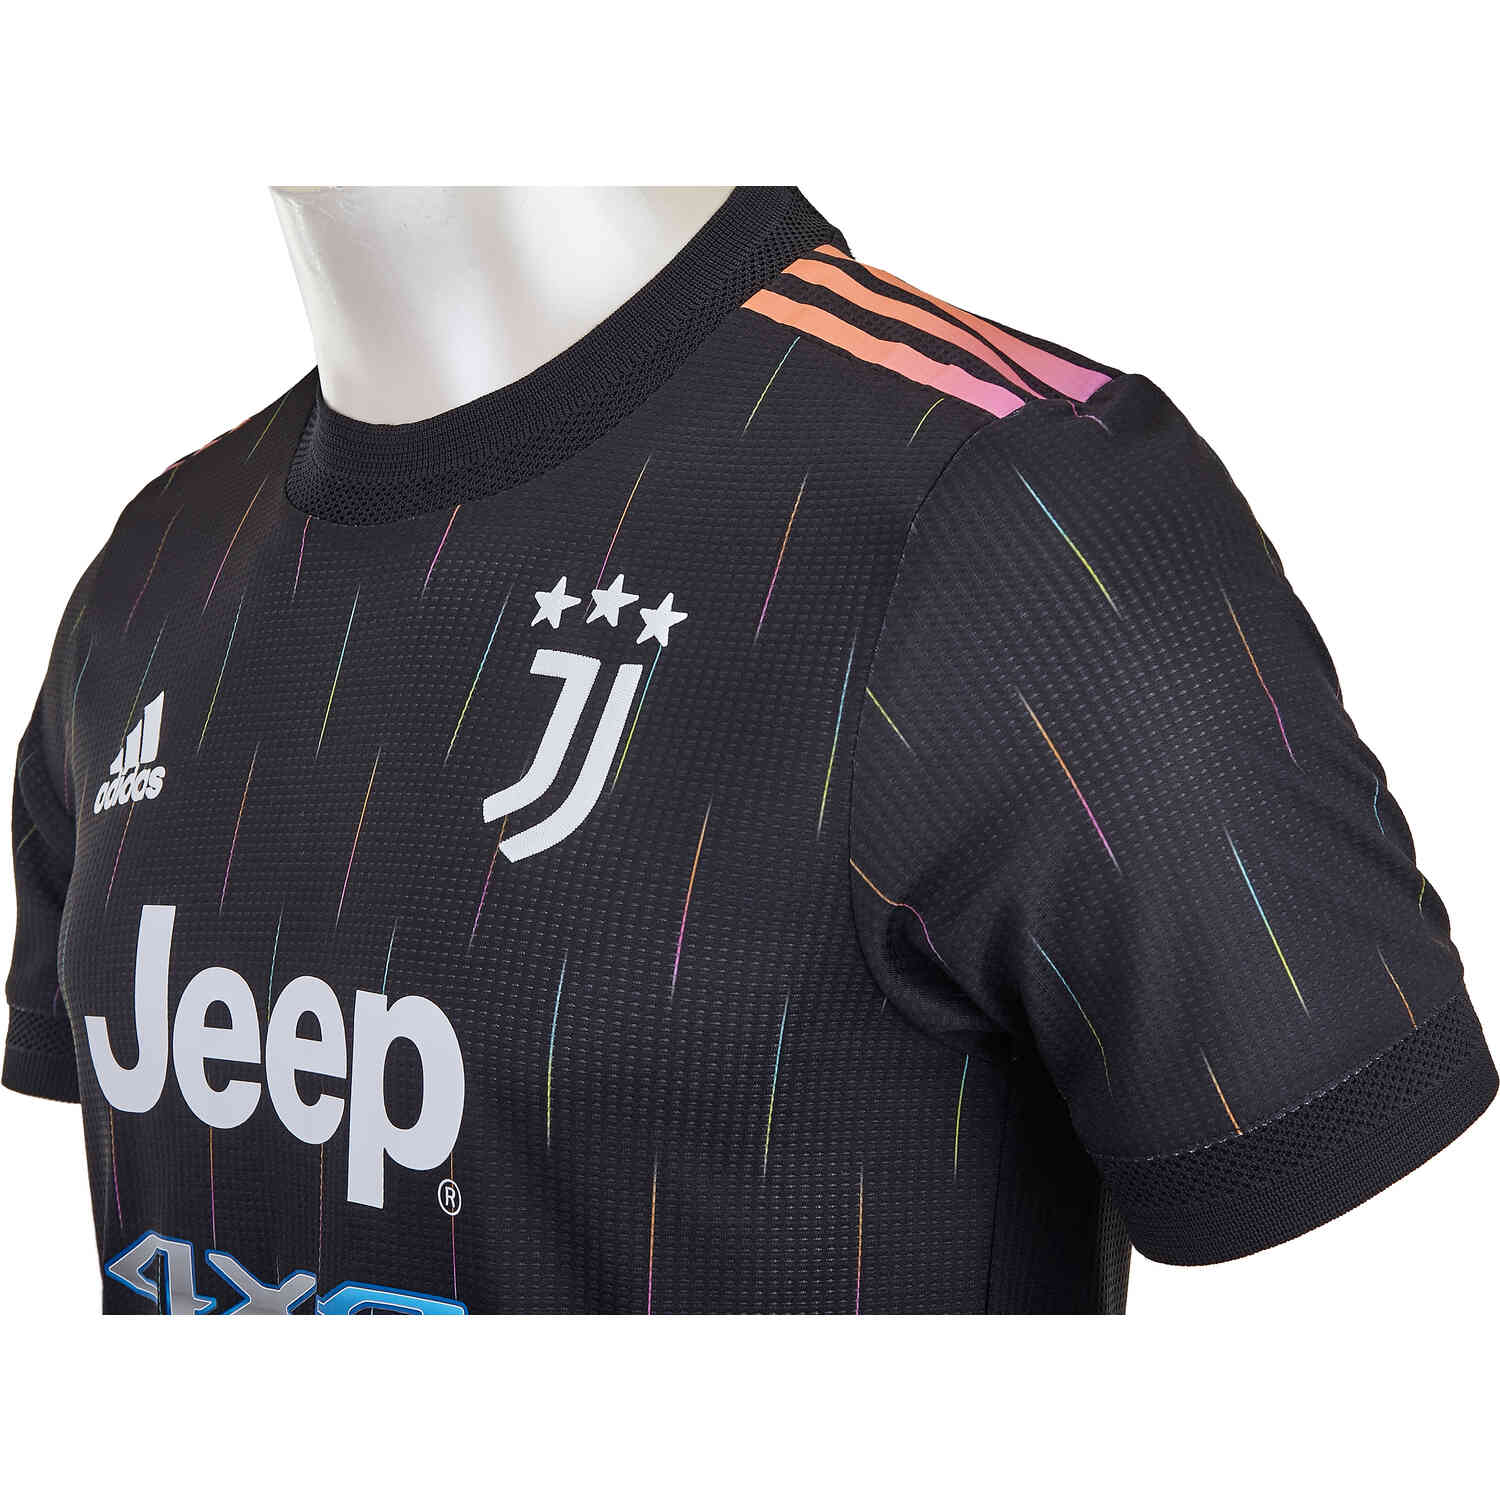 2021/22 adidas Juventus Away Authentic Jersey - SoccerPro